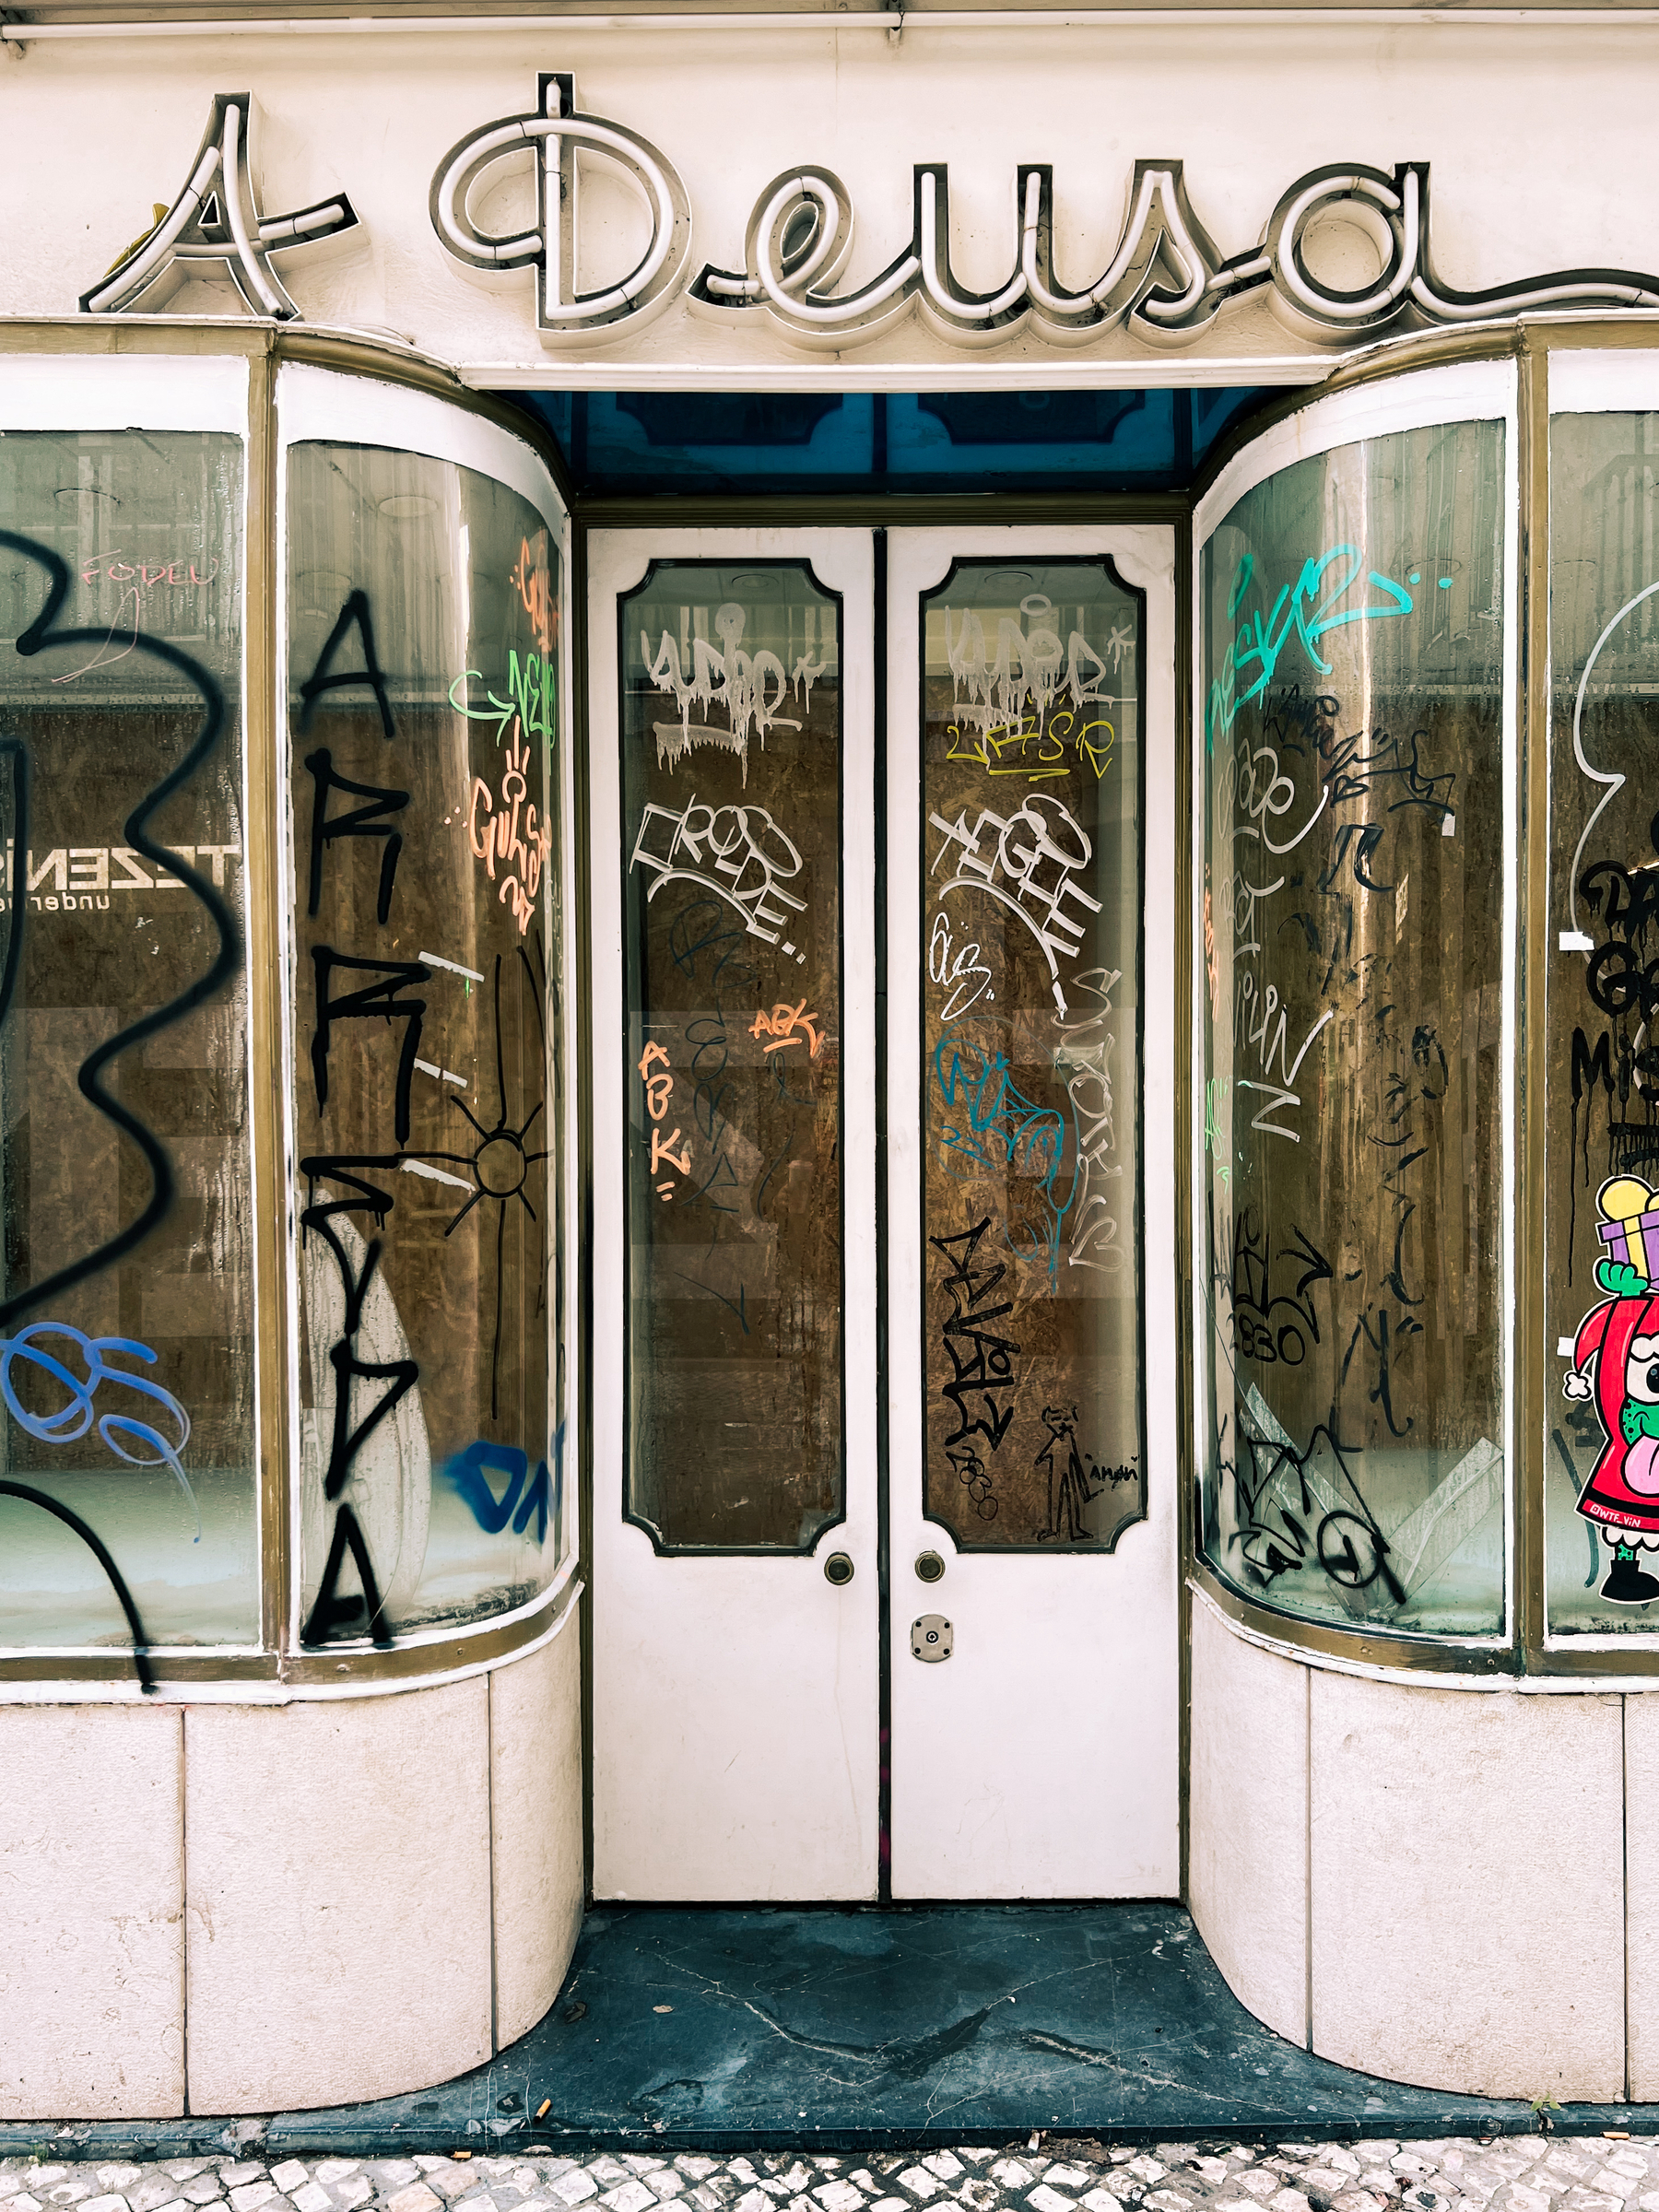 A closed shop, windows graffitied. “A Deusa” (The Godess) still visible above door, in neon. 